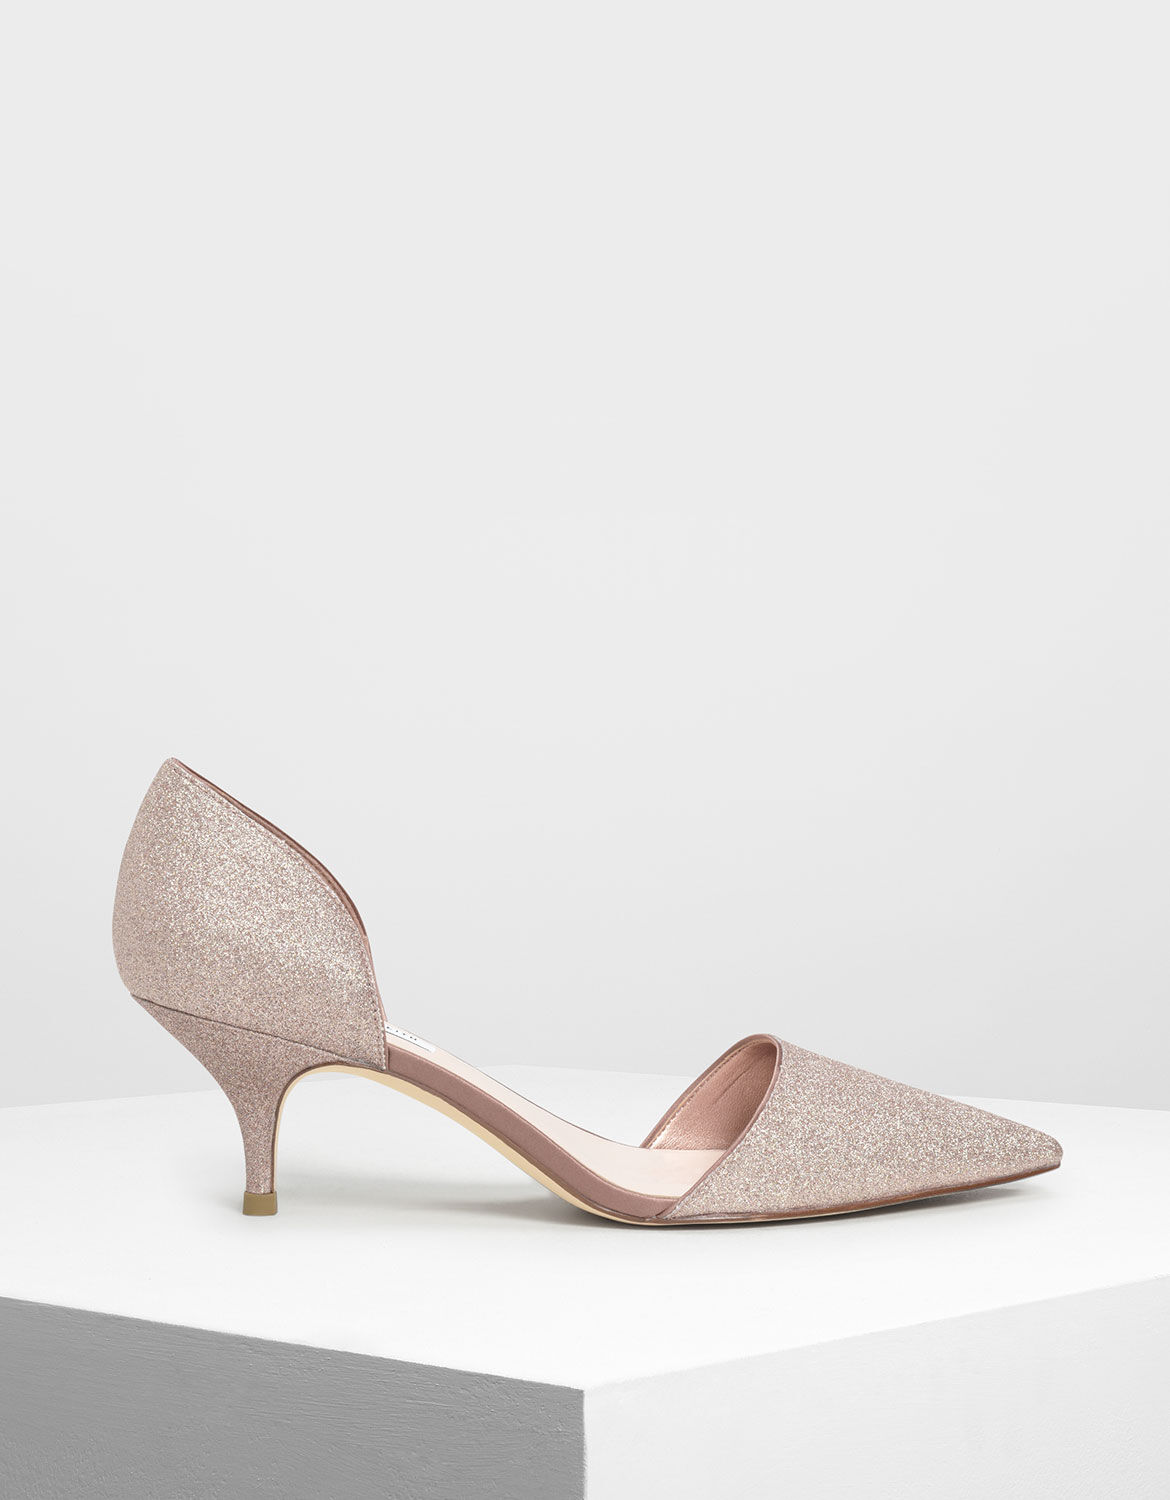 fabric heels